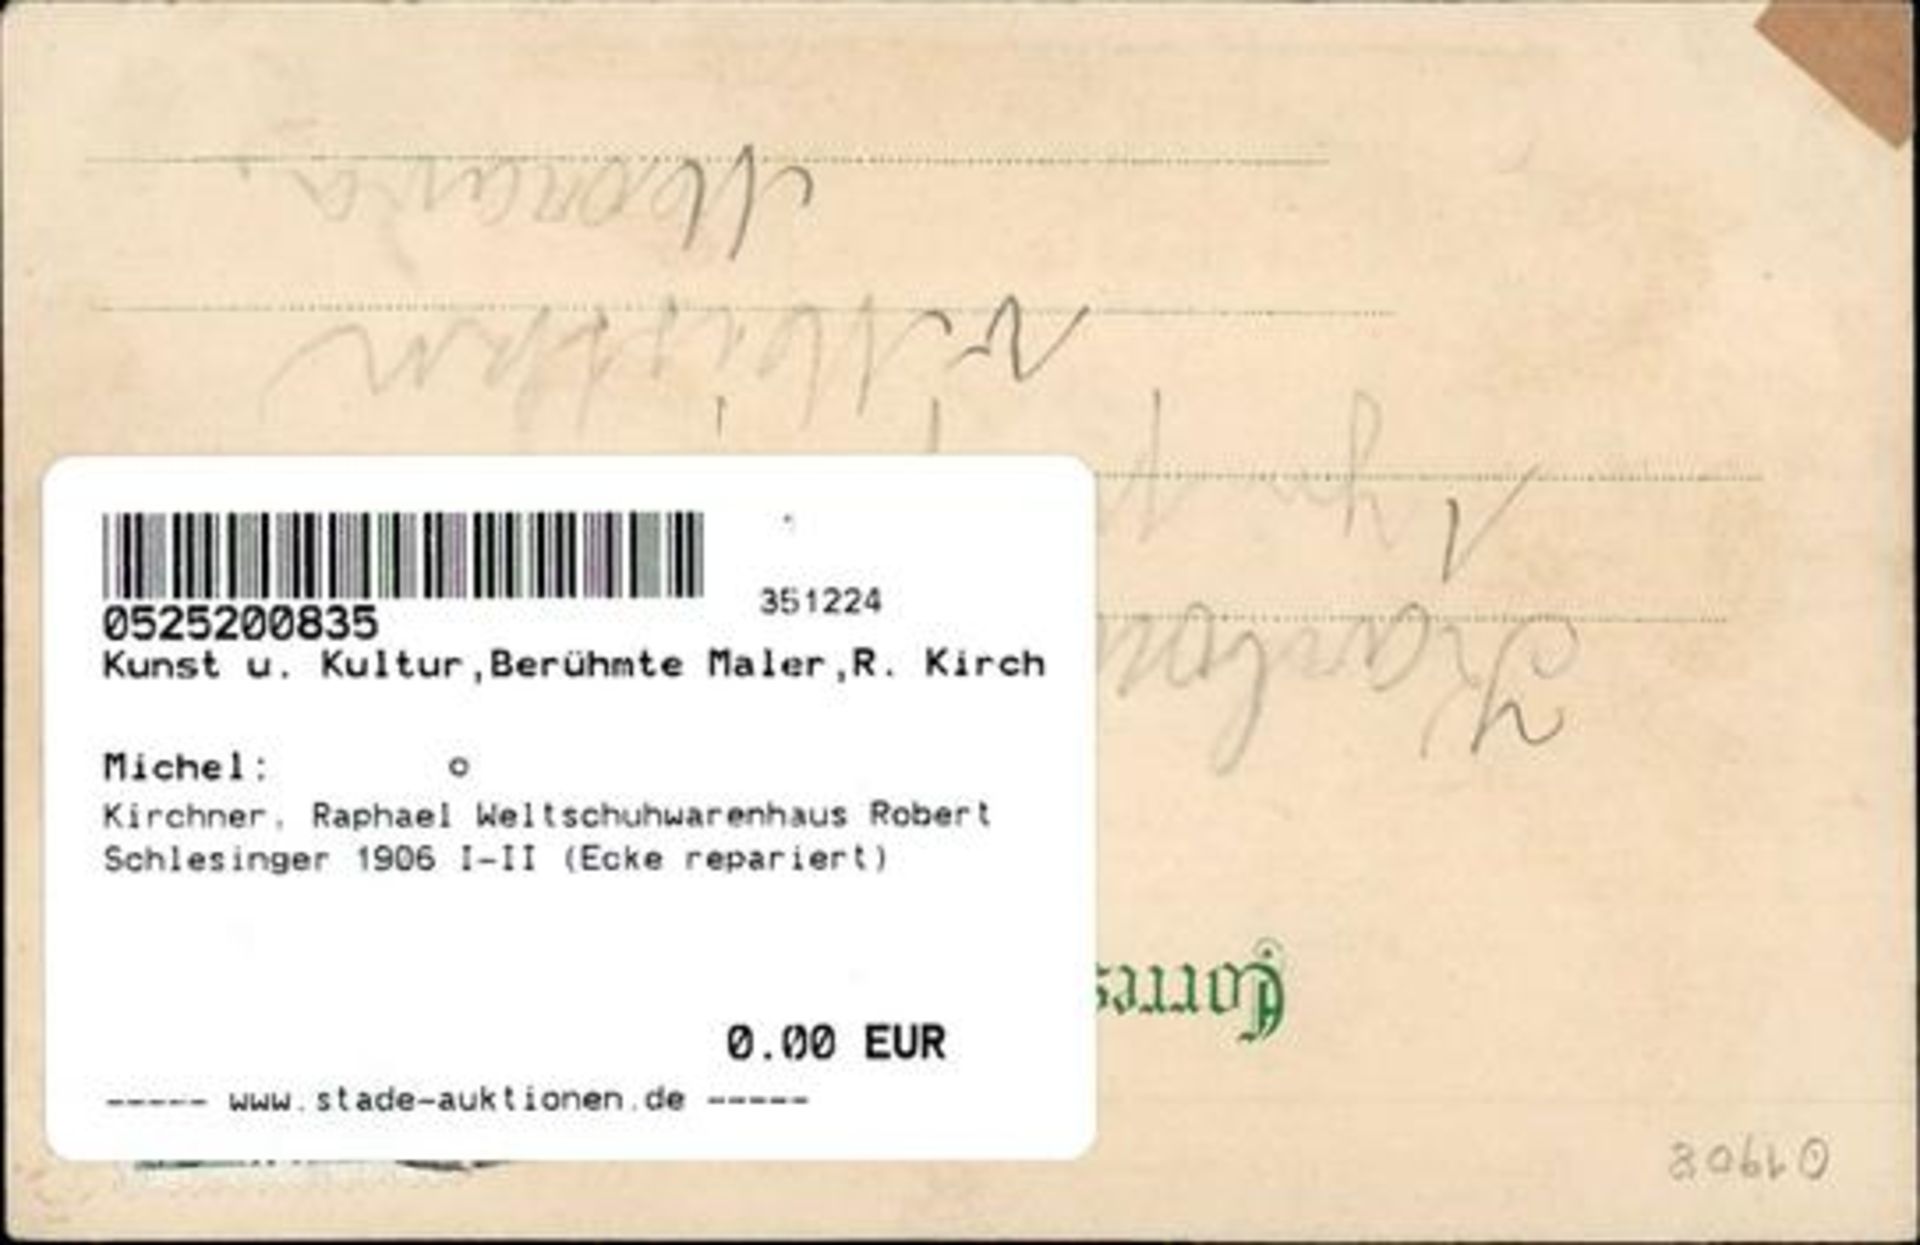 Kirchner, Raphael Weltschuhwarenhaus Robert Schlesinger 1906 I-II (Ecke repariert) - Bild 2 aus 2